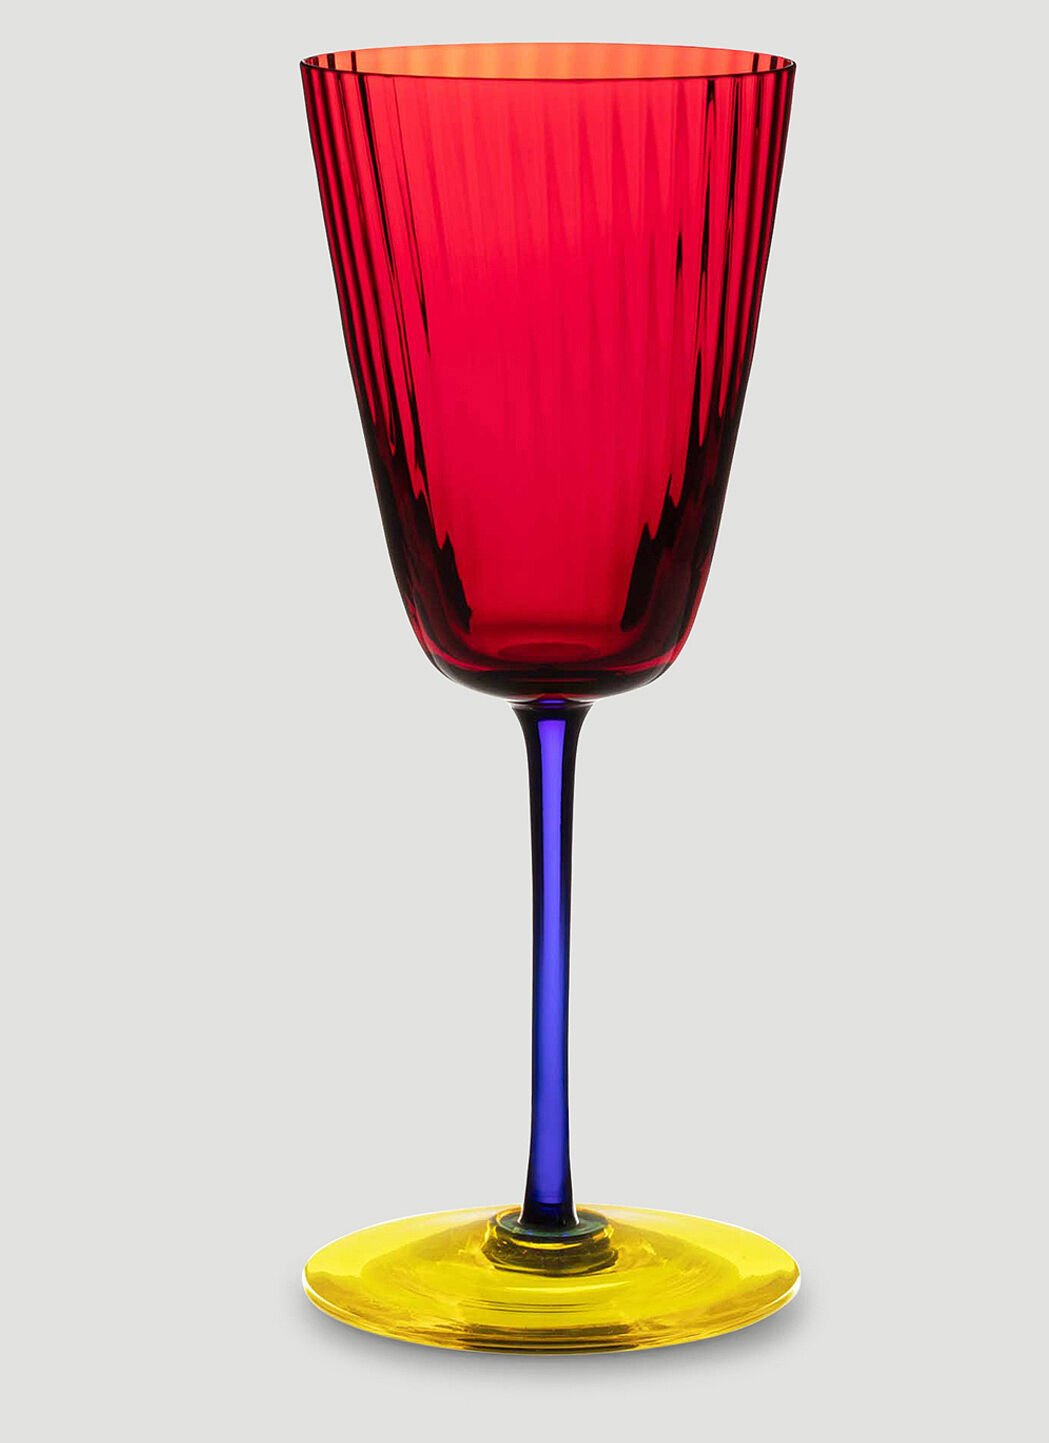 Seletti Hand-Blown Murano White Wine Glass Multicolour wps0691129